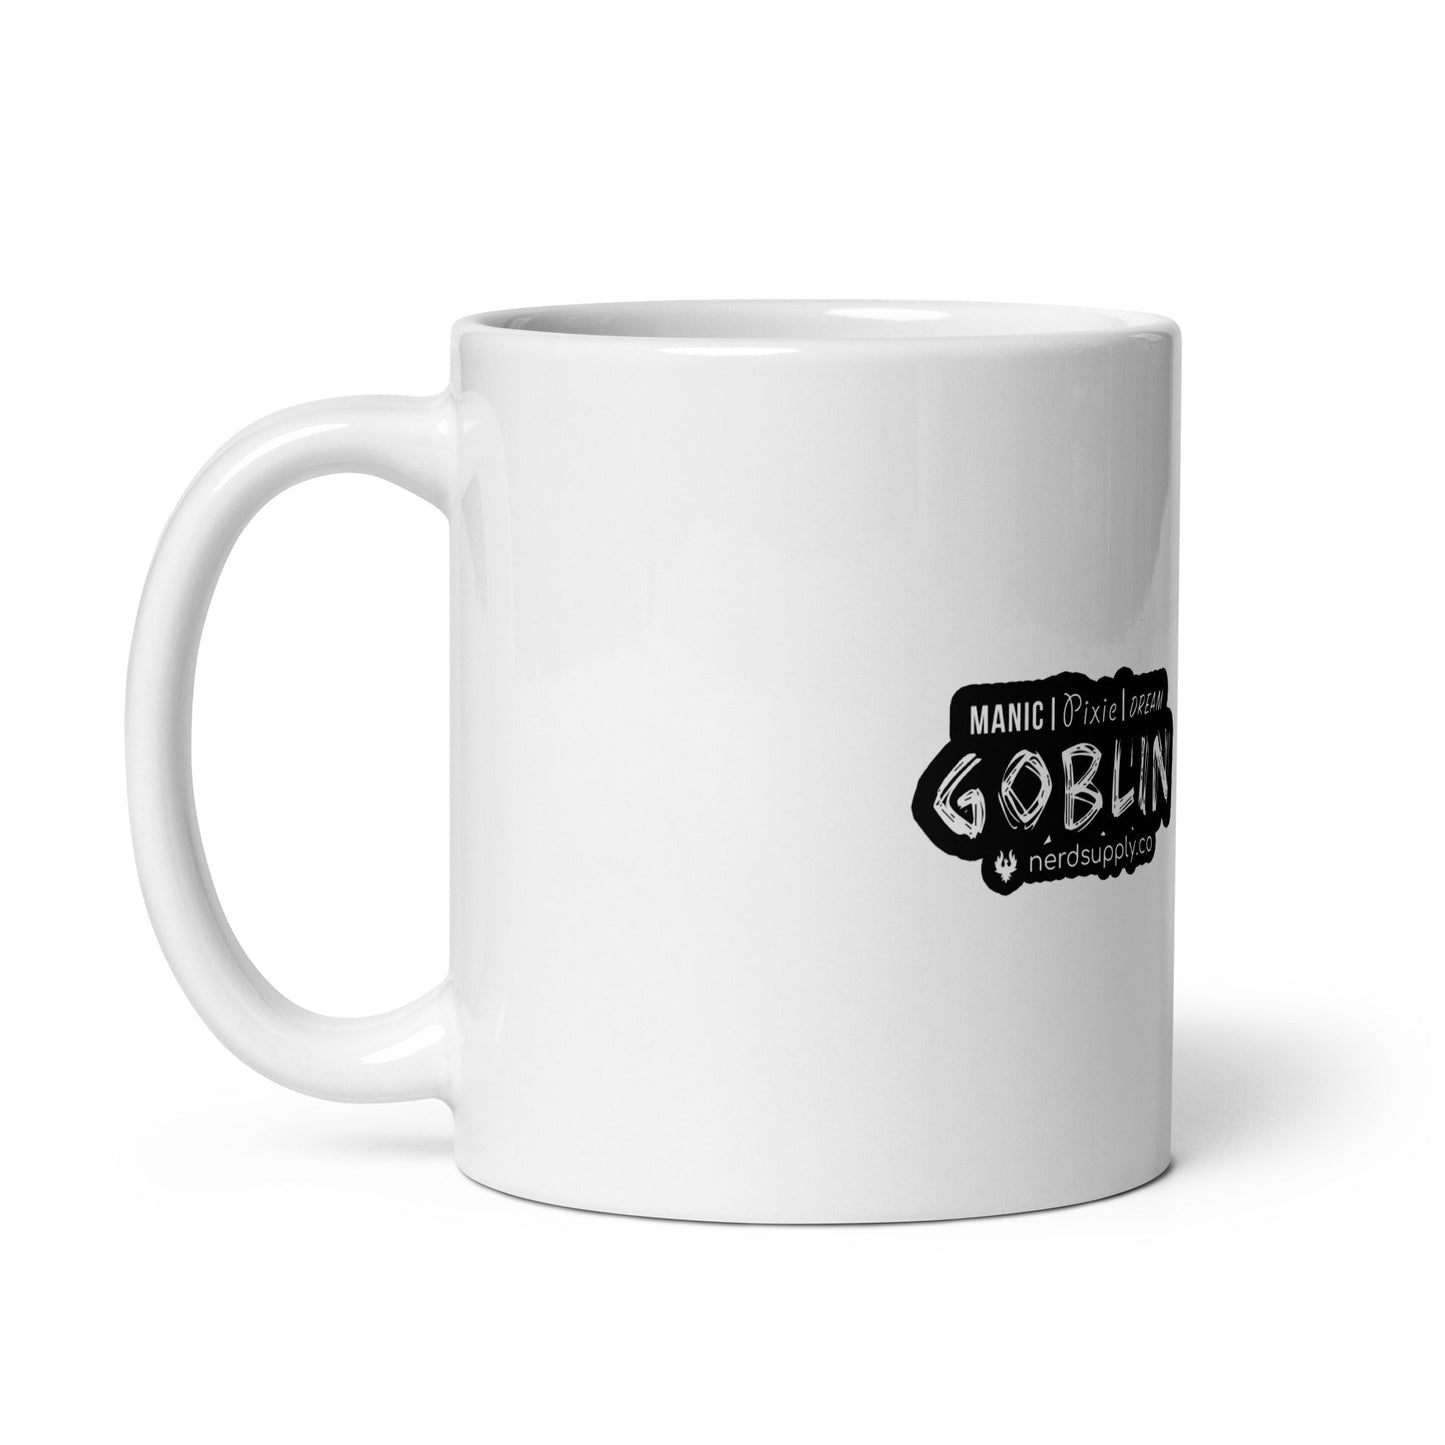 Manic Pixie Dream Goblin White Mug - The Nerd Supply Company